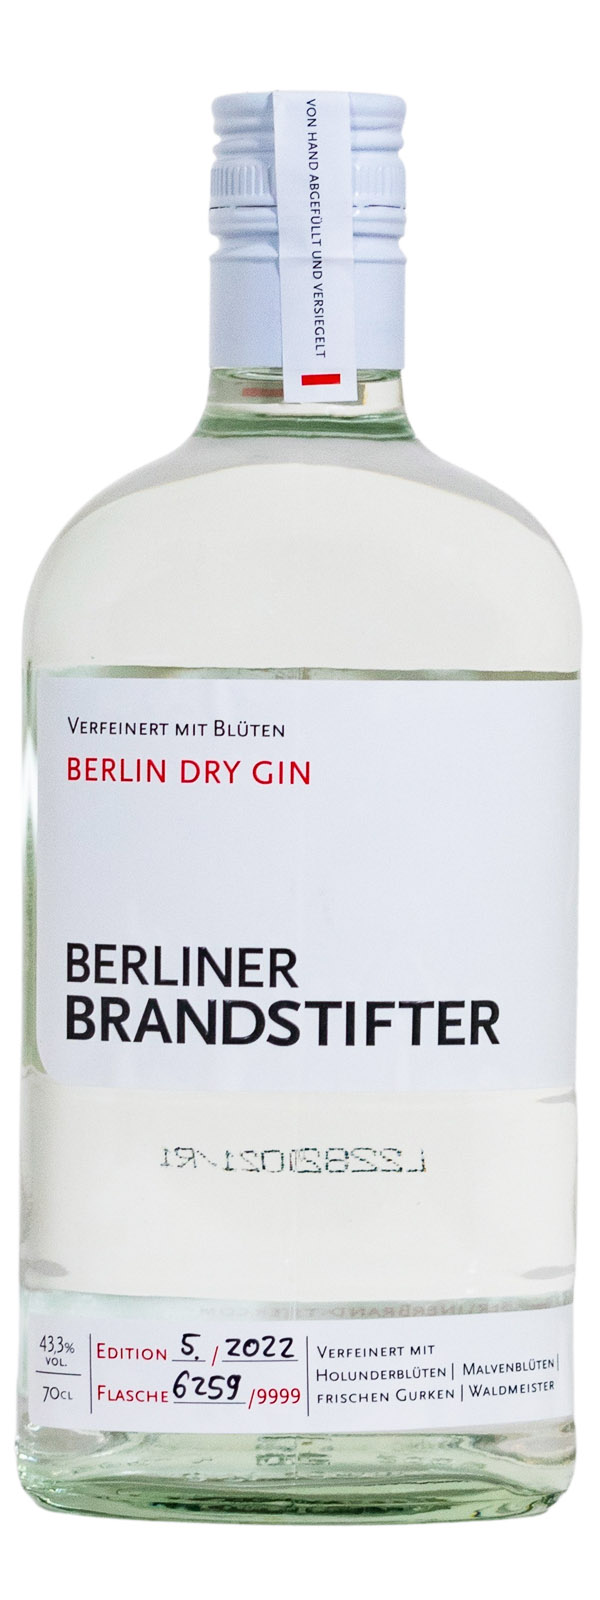 kaufen Berlin Berliner günstig Dry Brandstifter